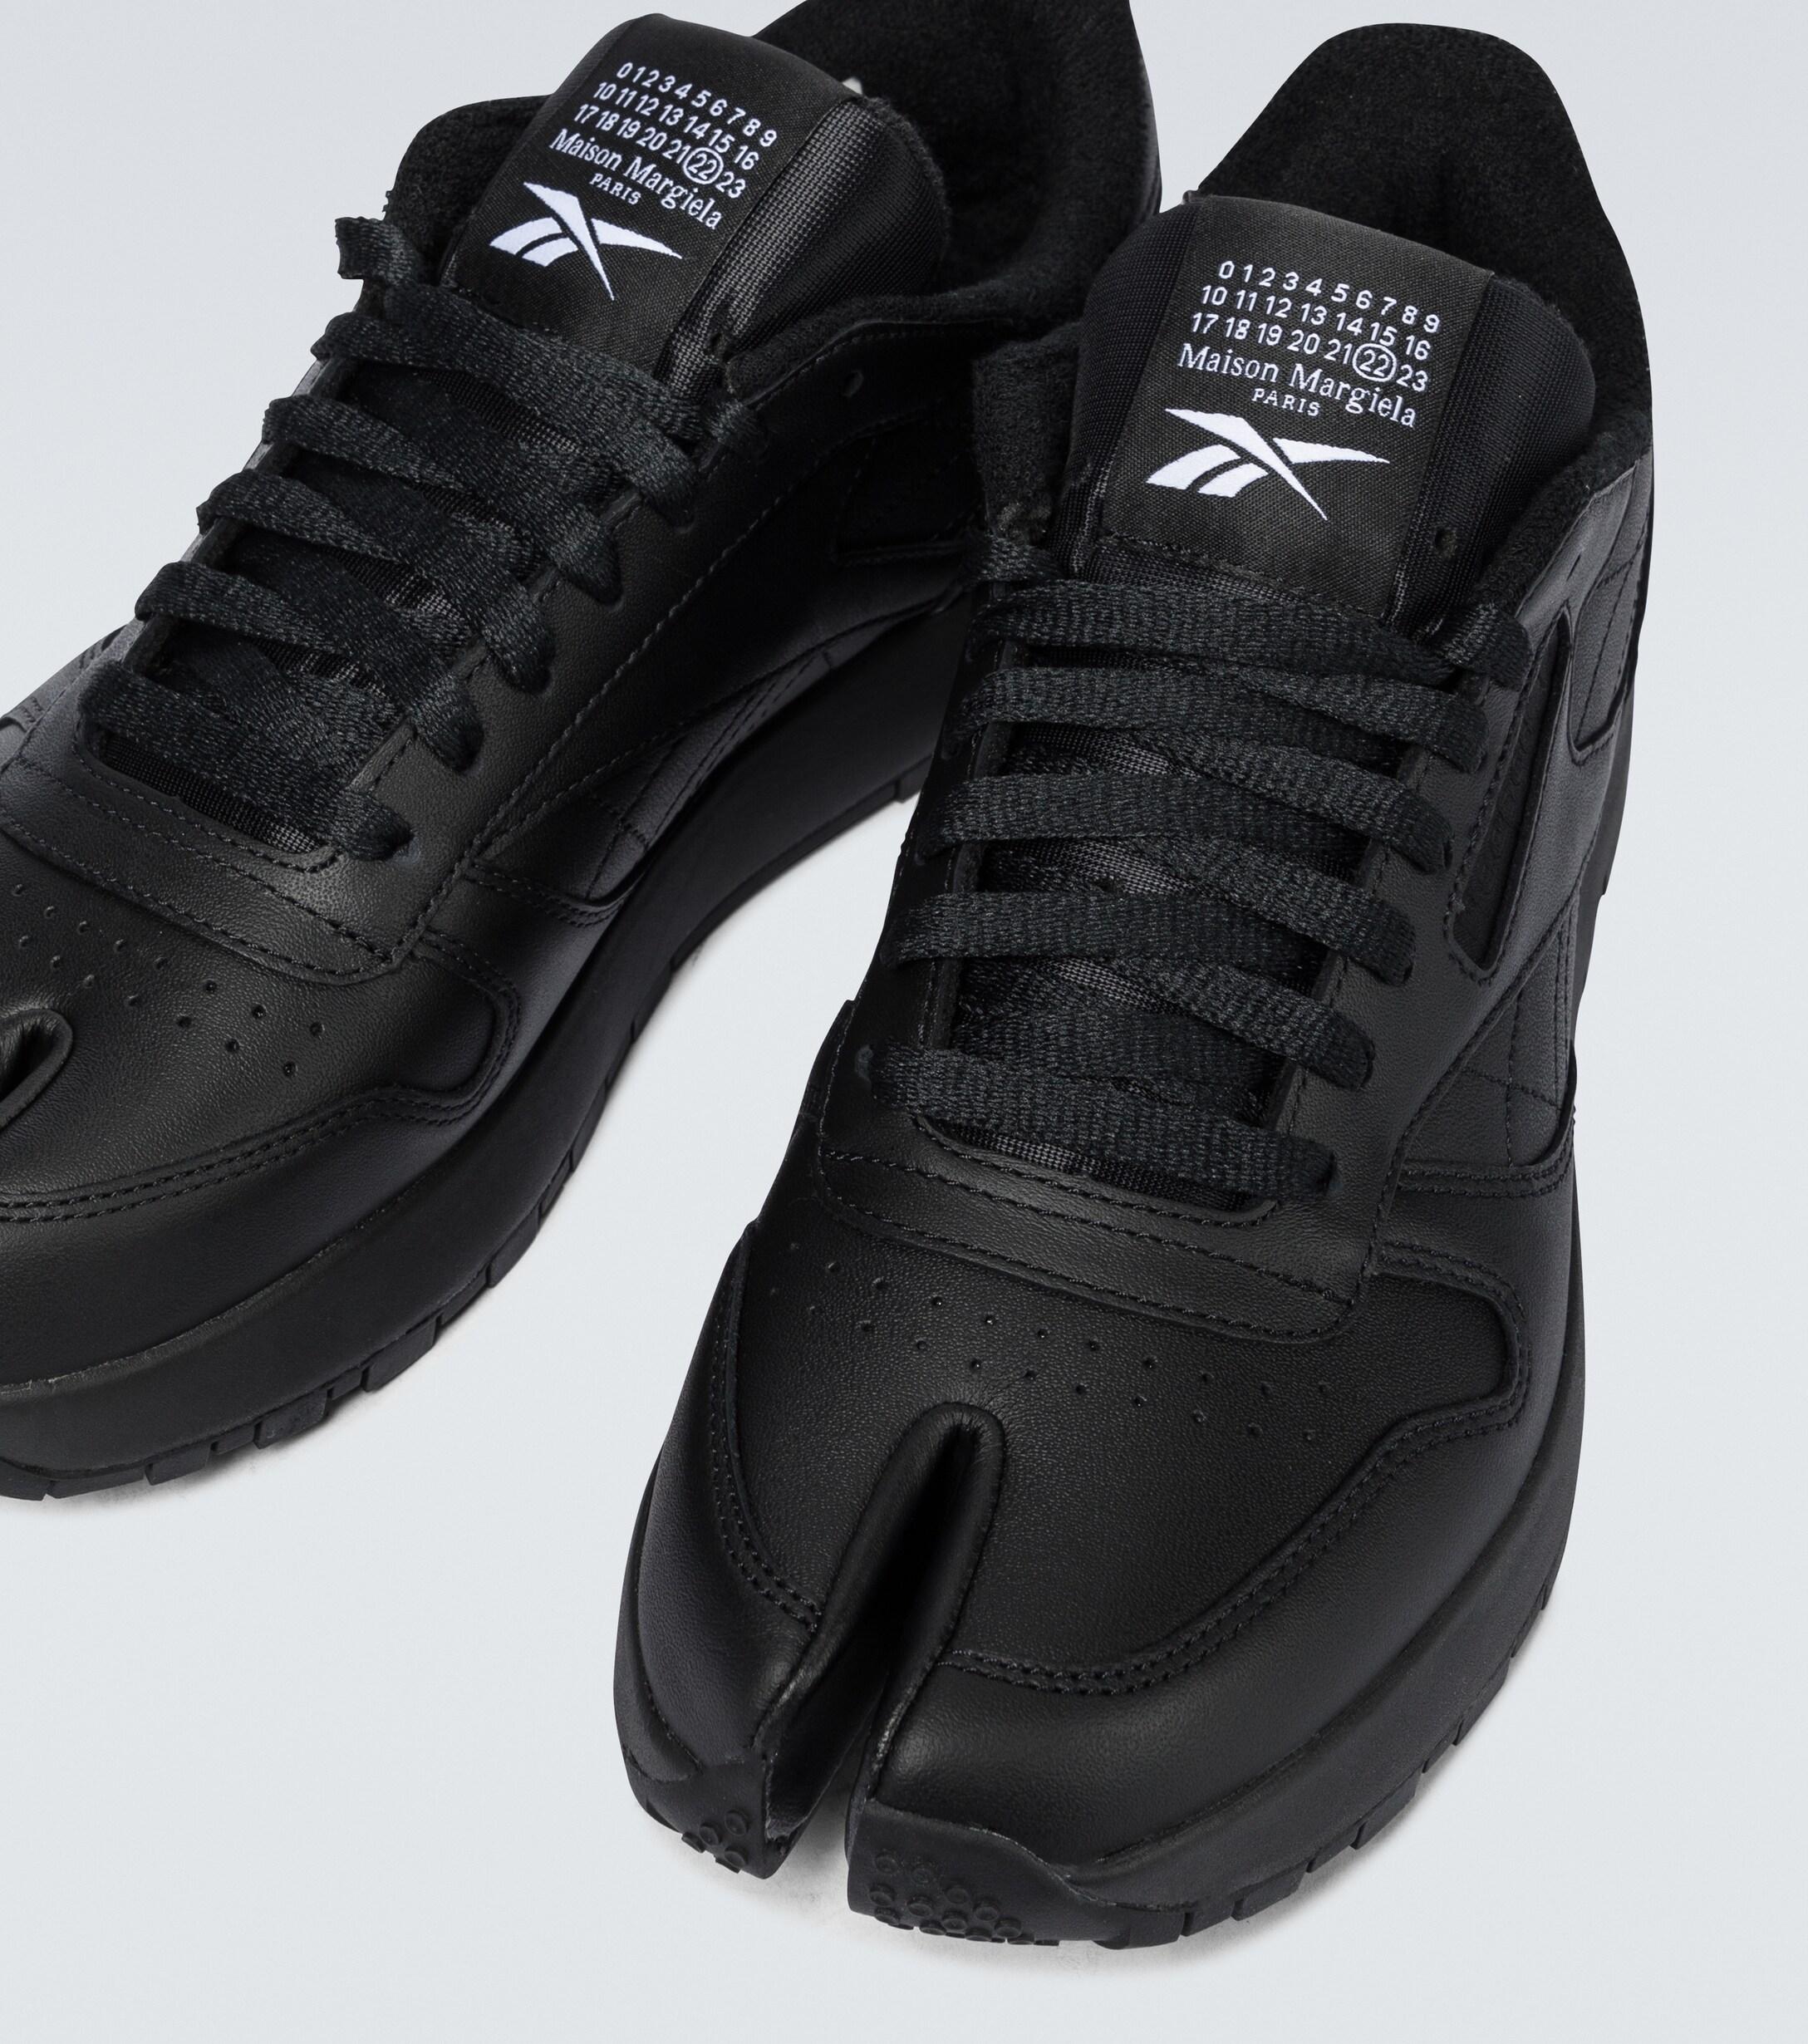 Maison Margiela X Reebok Classic Leather Tabi Sneakers in Black 